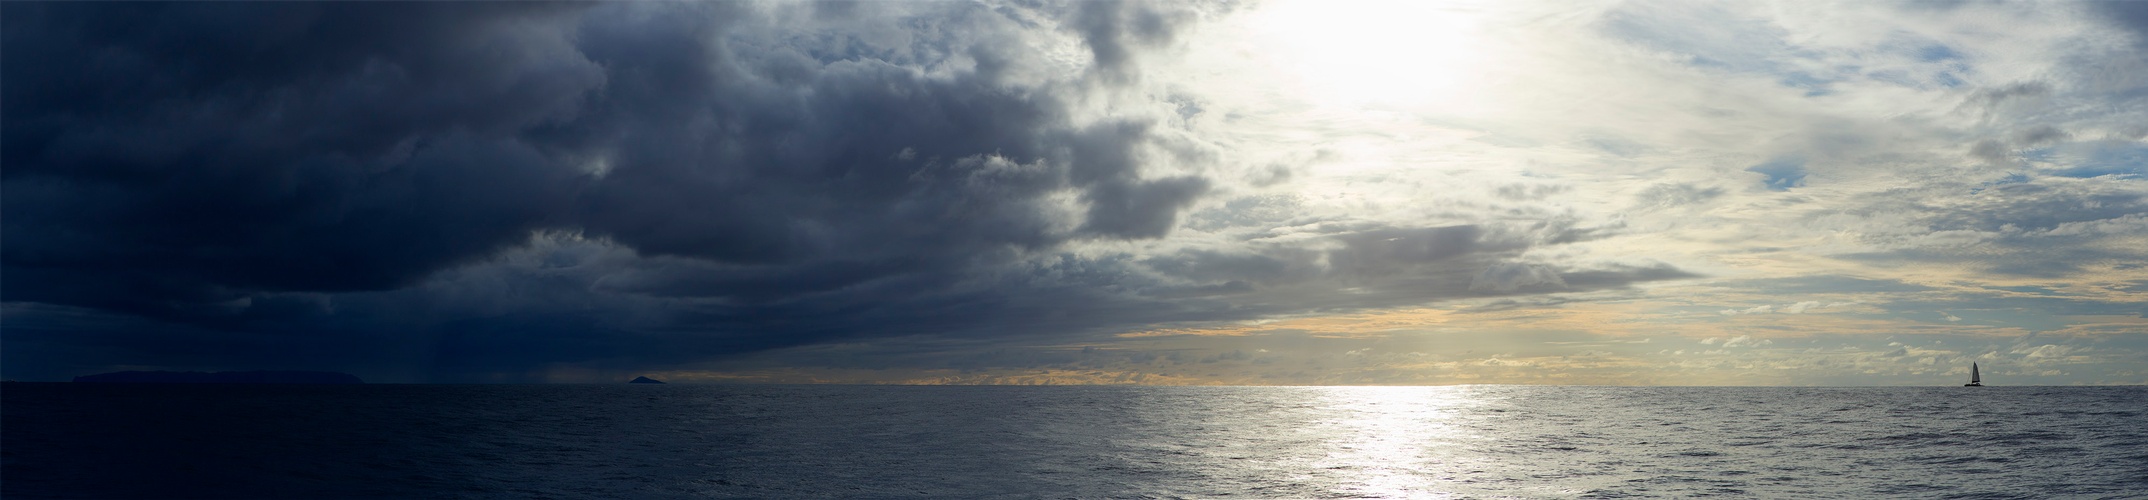 Landscape Photograph of Ocean Under Cloudy Sky by  Farmington Photographer at Mode T Productions